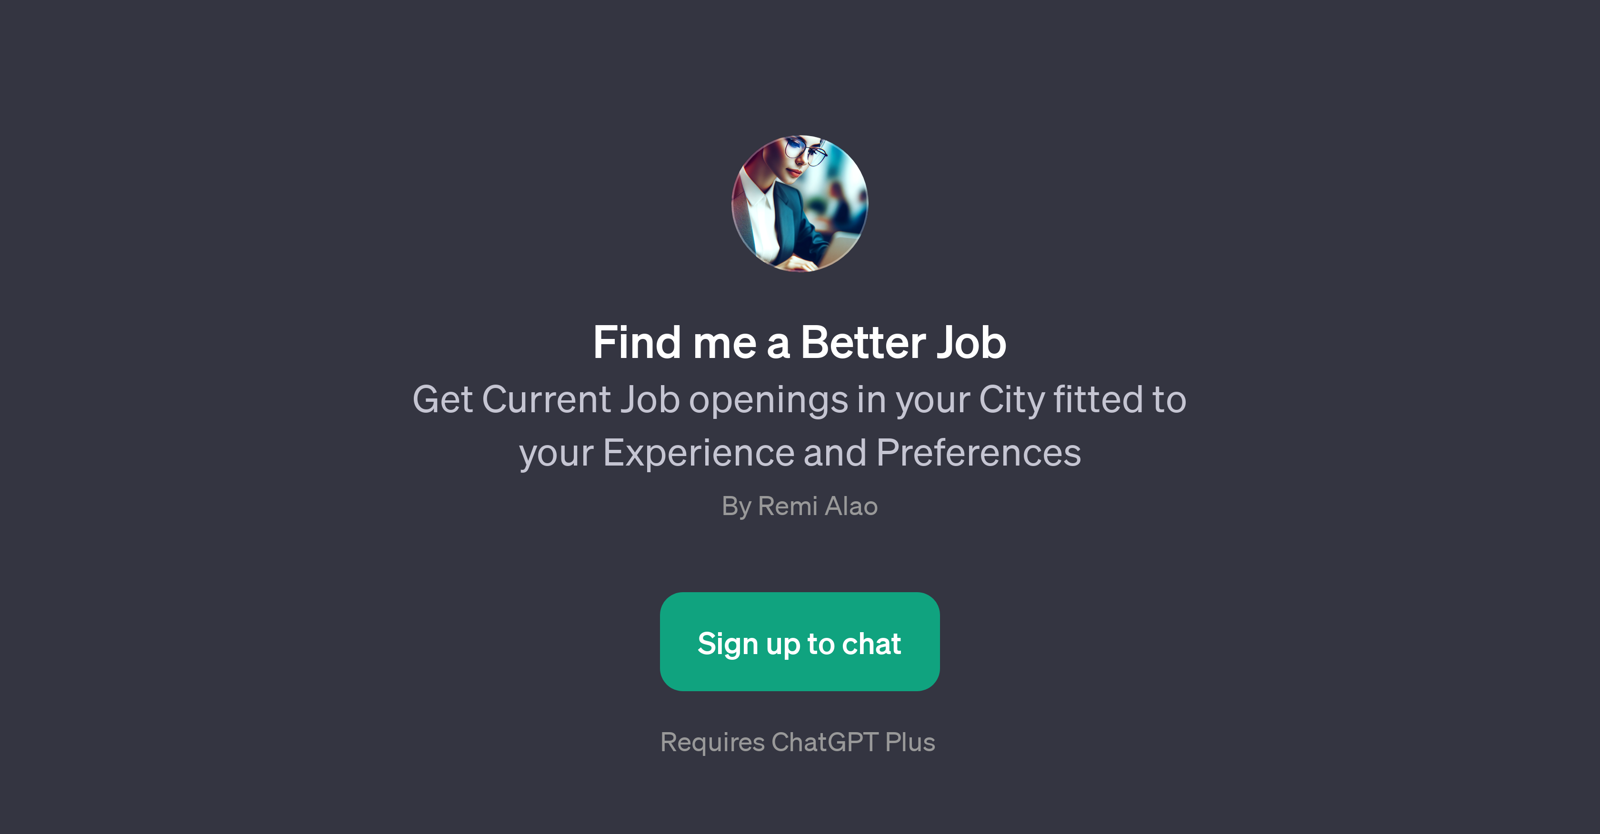 Find me a Better Job website